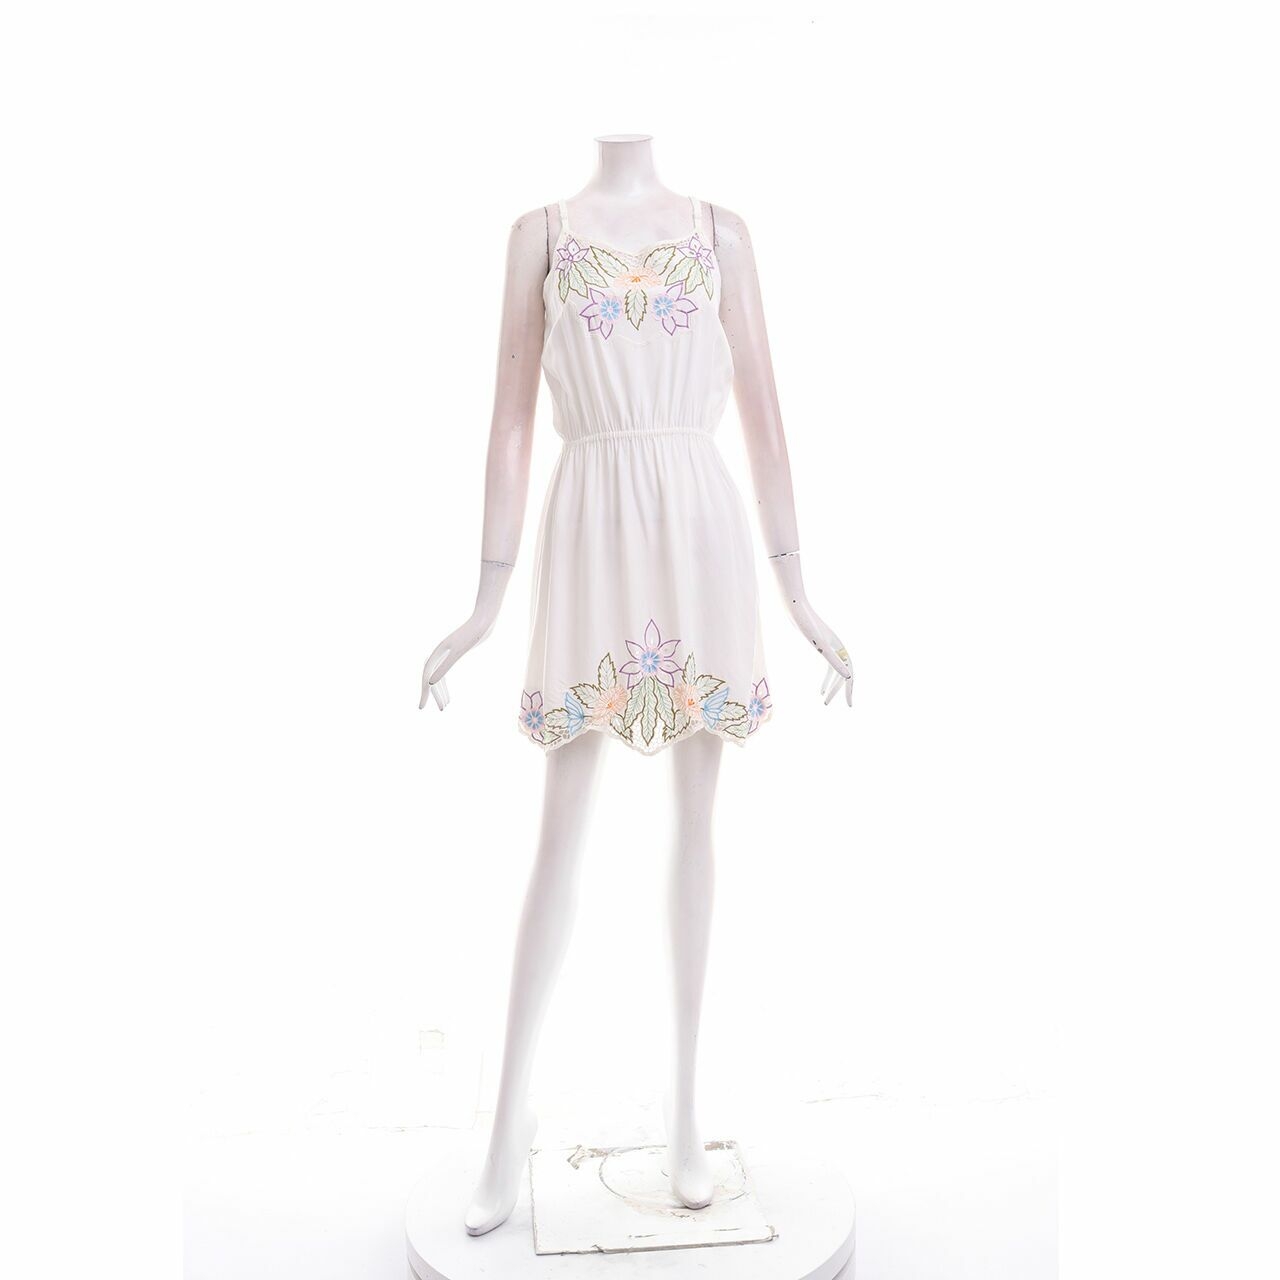 Topshop White Floral Mini Dress